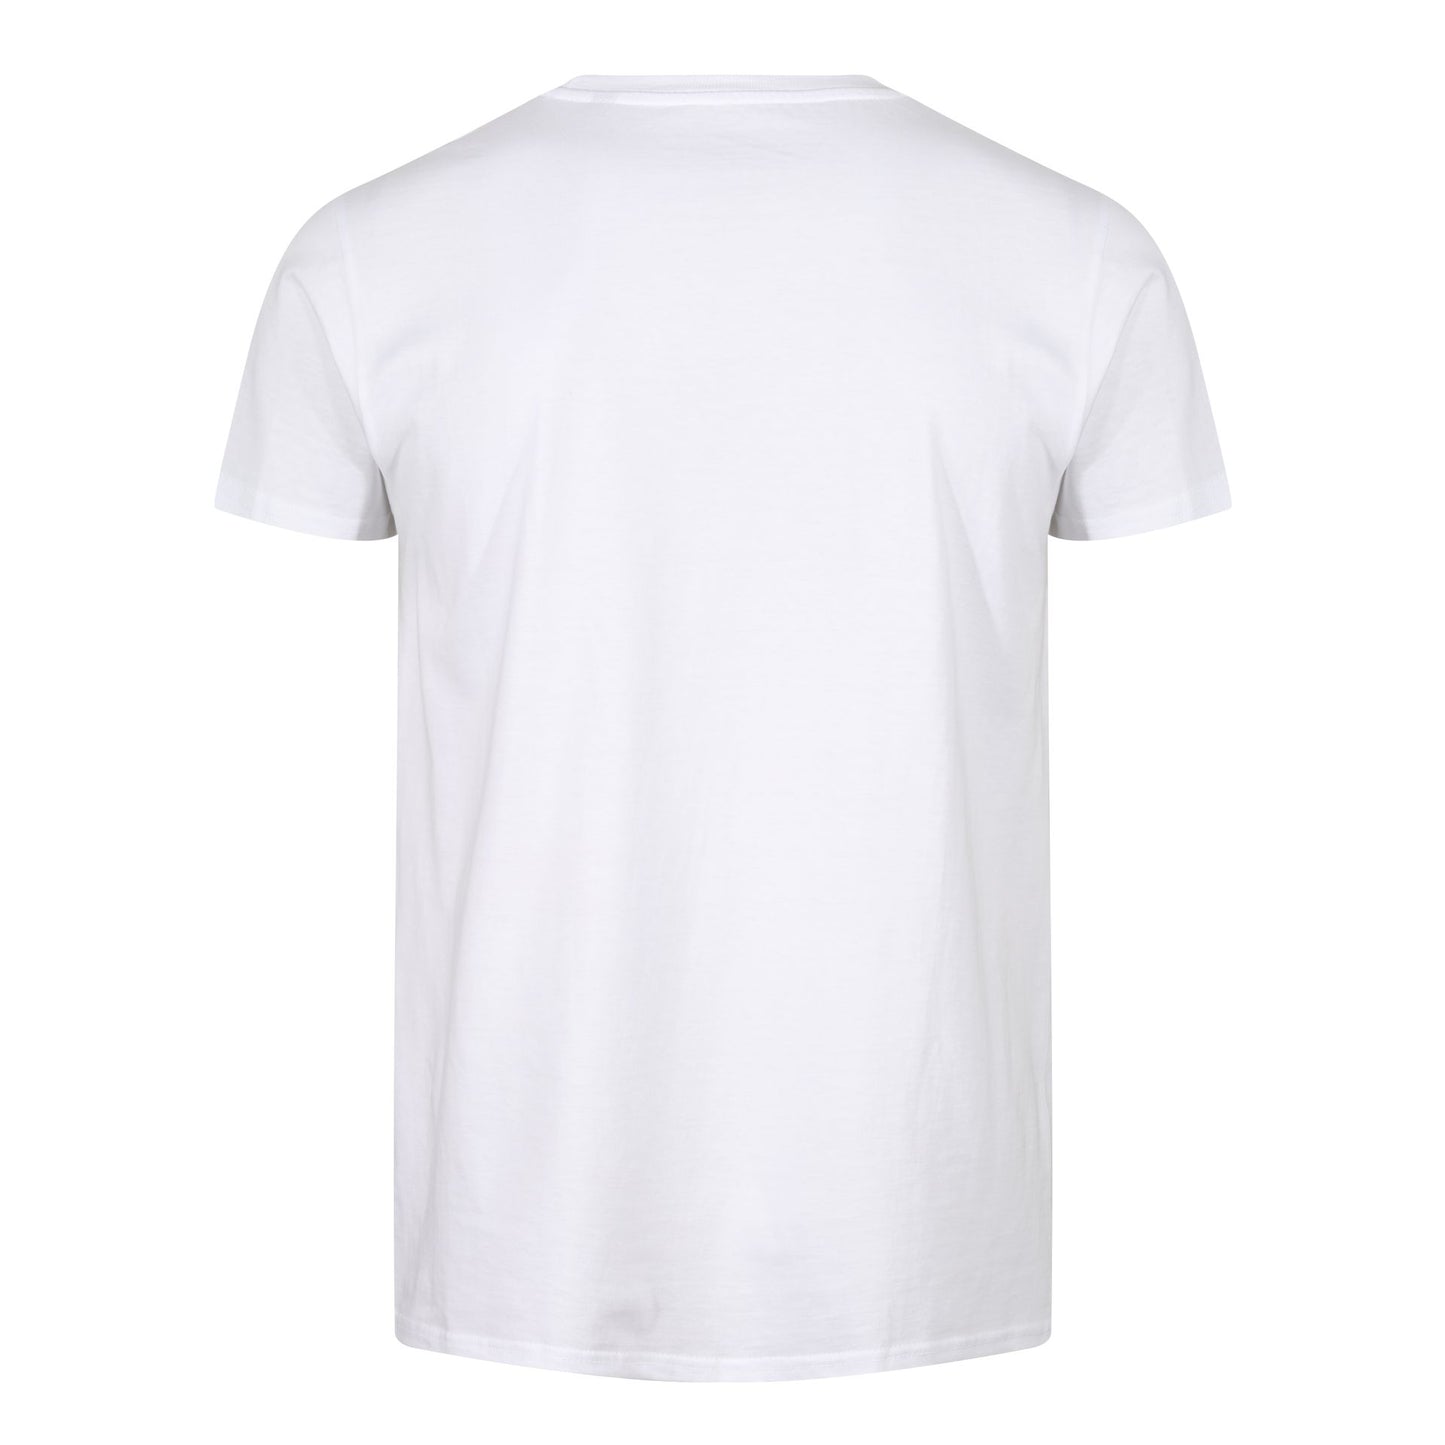 Jnr MFC Distressed Crest T-Shirt White